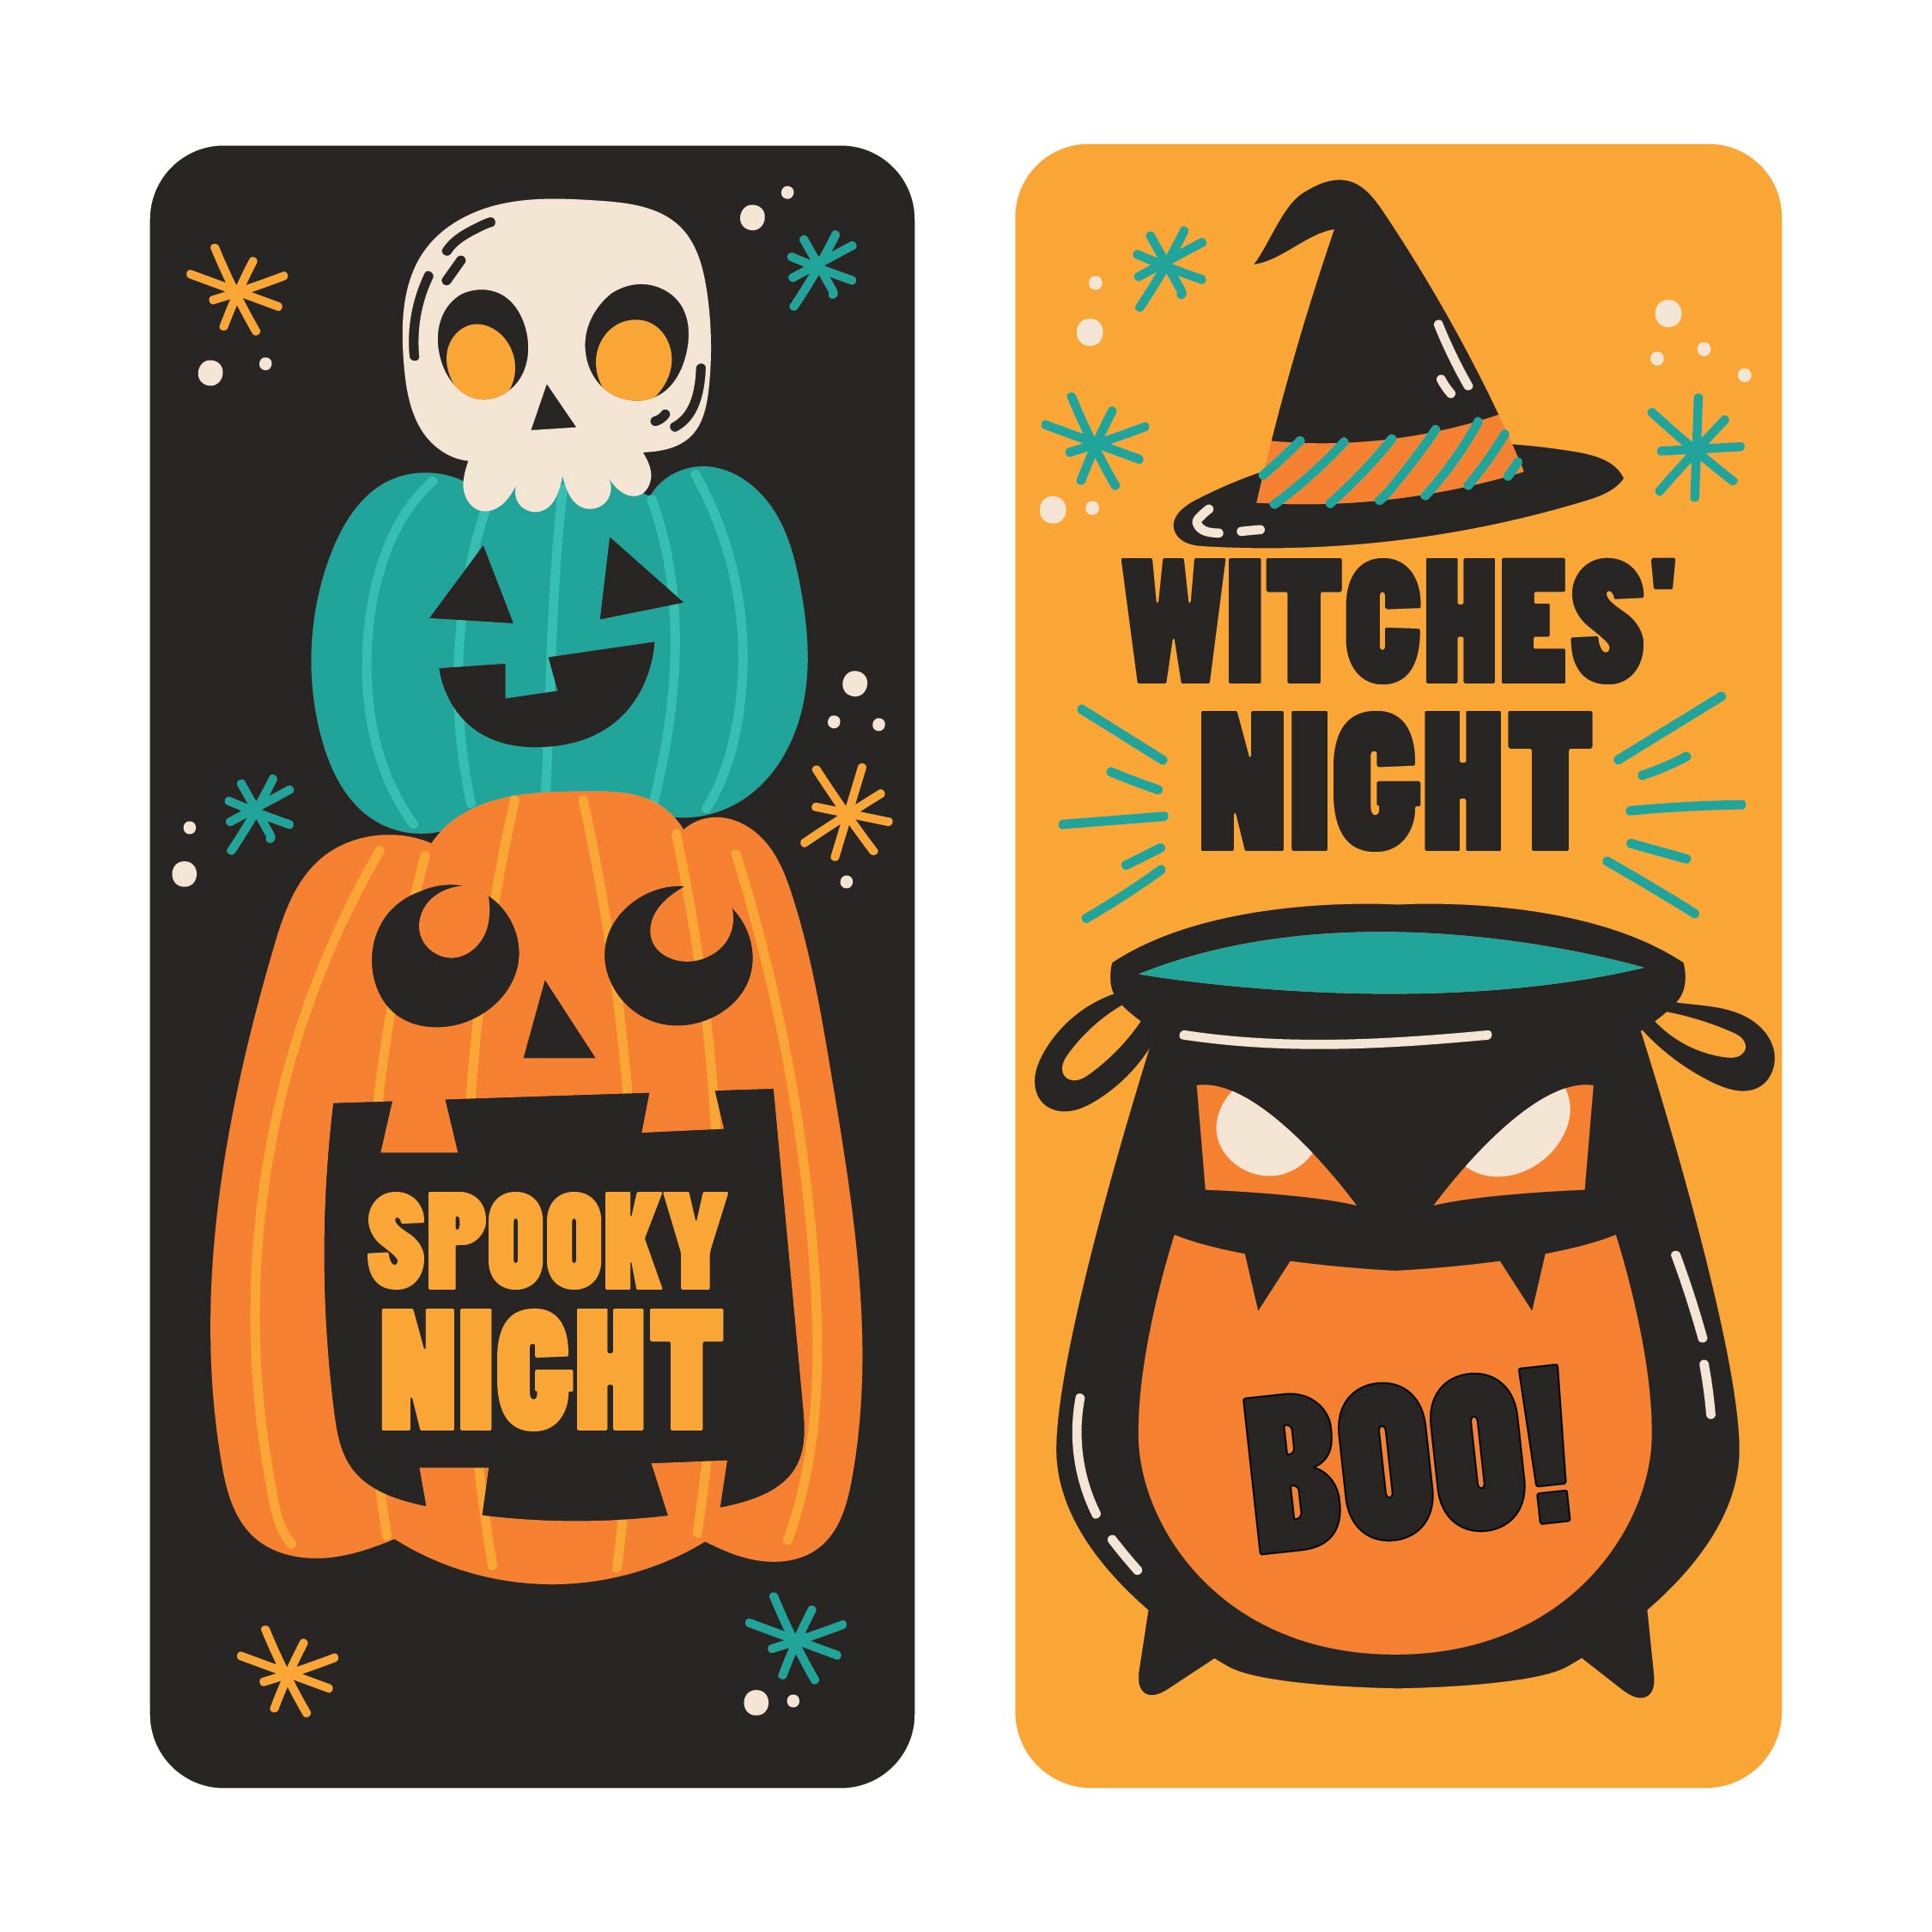 8 Best Images of Printable Halloween Bookmarks Jokes Free Printable